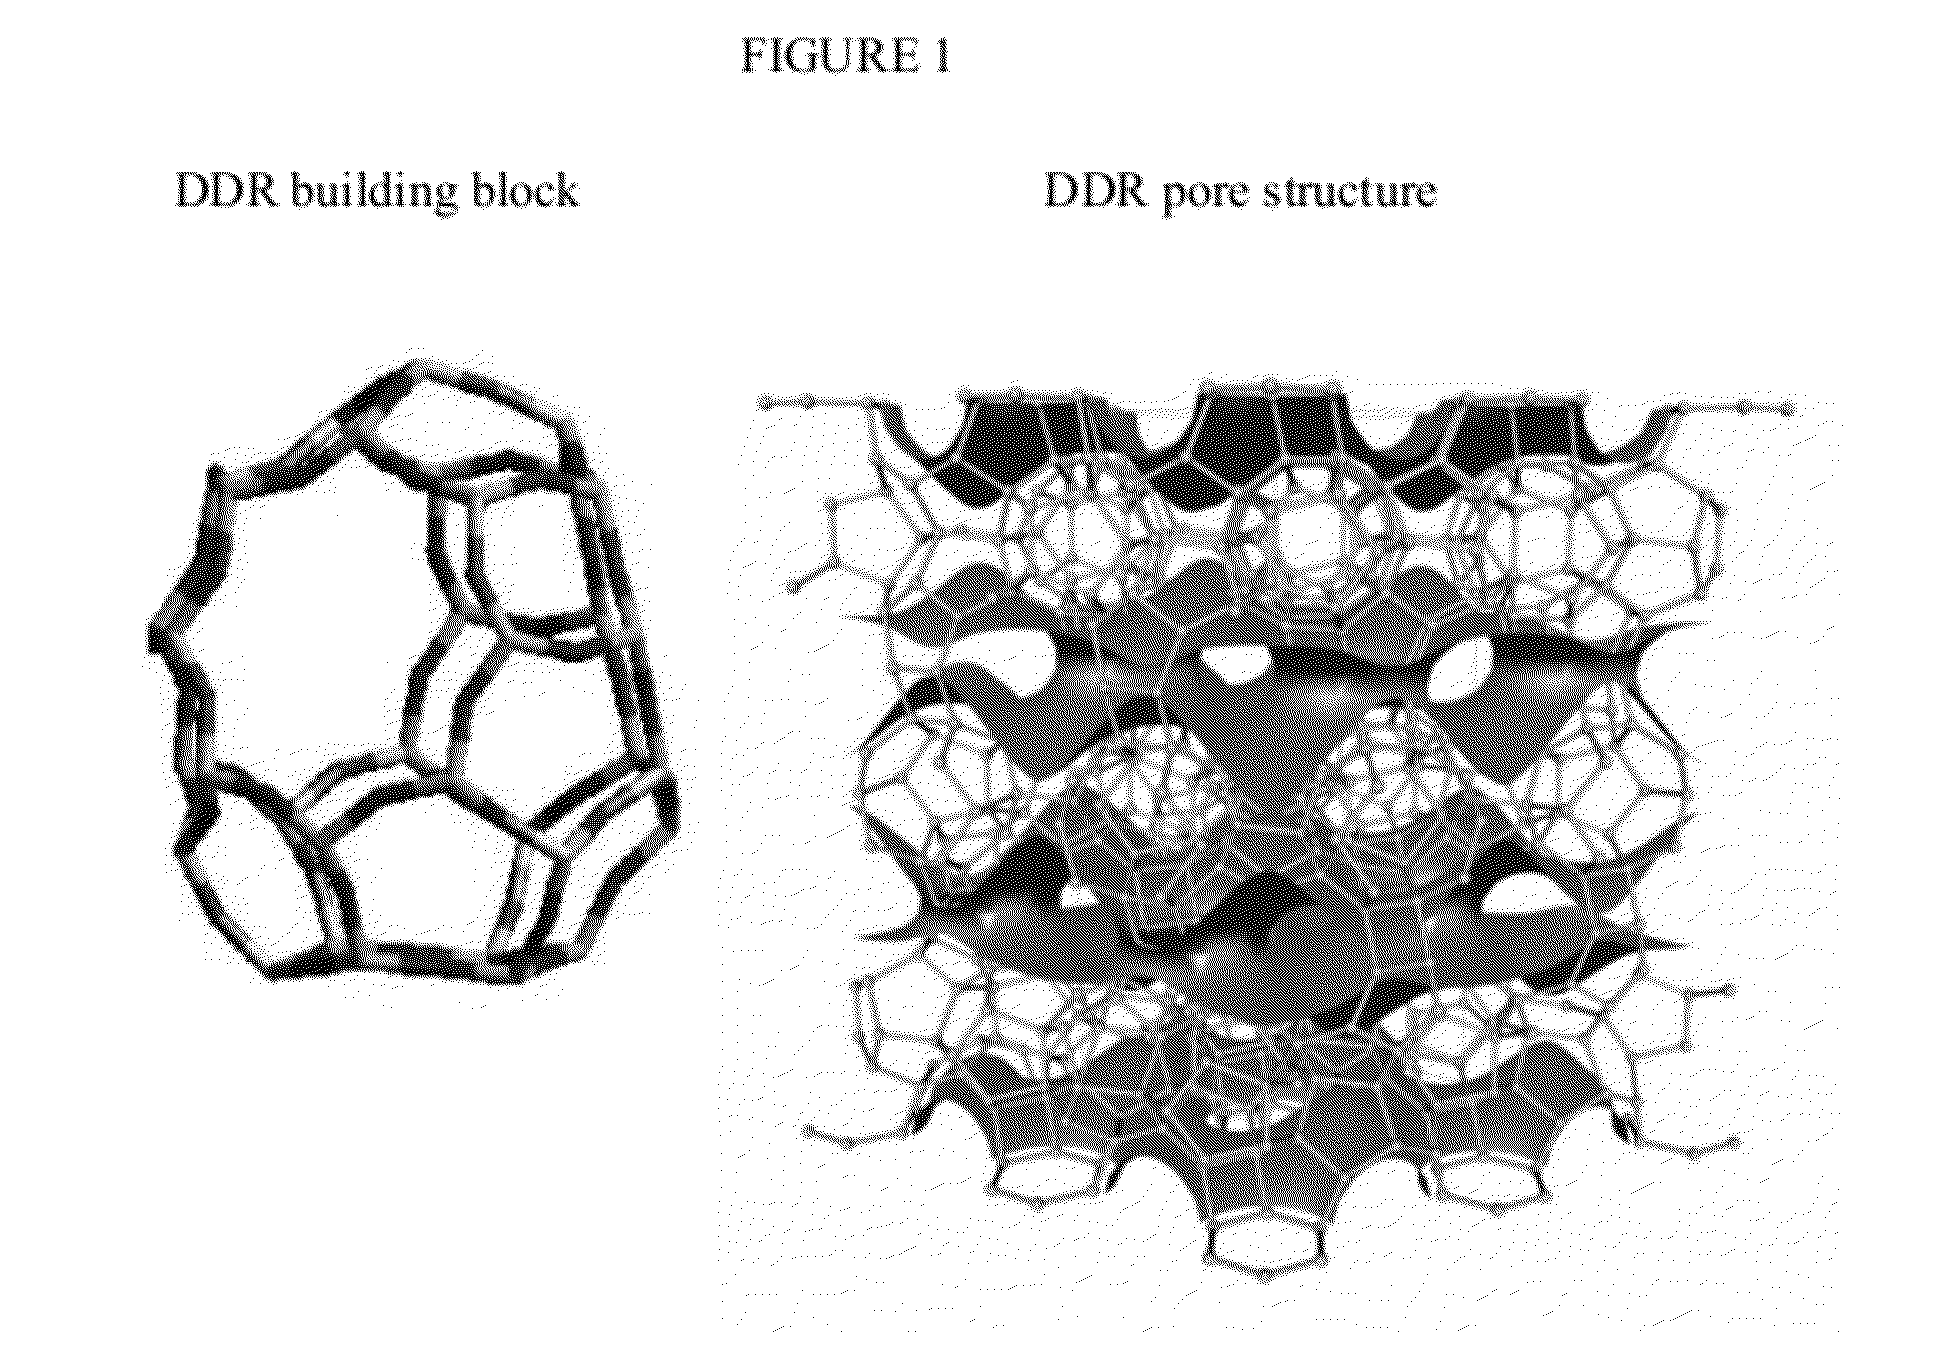 Zeolite DDR nanoparticles